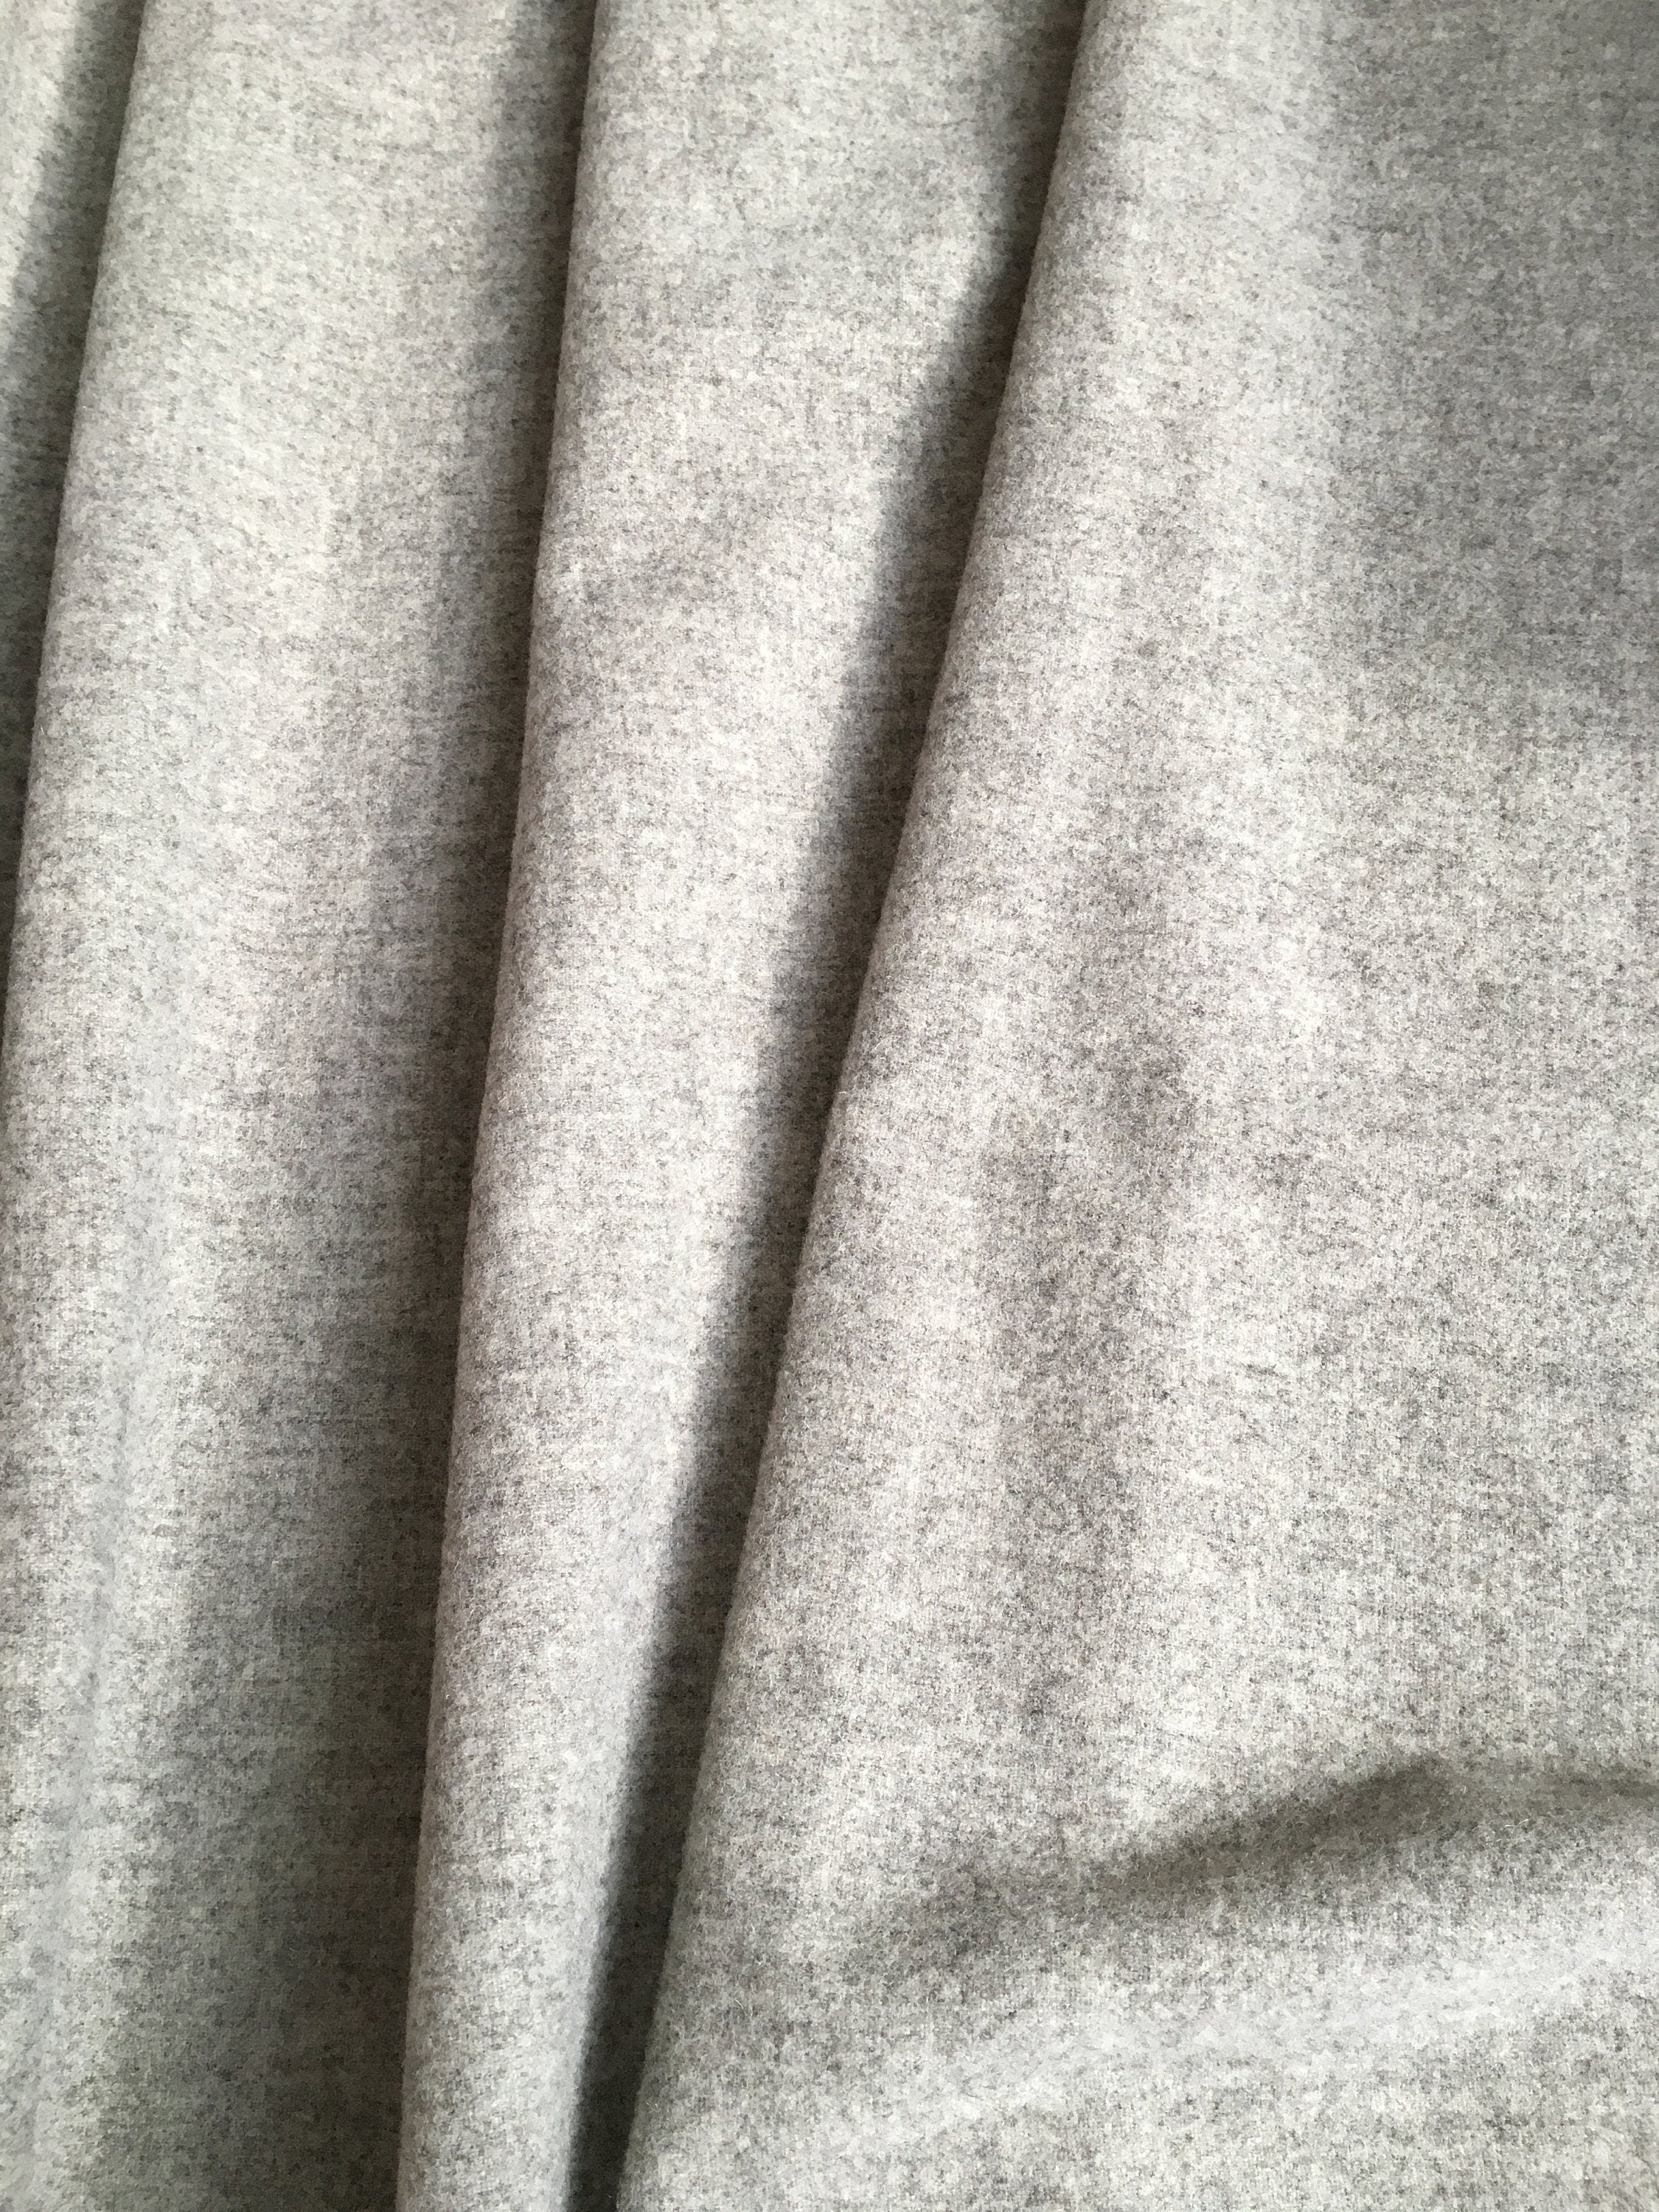 Light grey Tudor 'russet' style plain weave woollen cloth - fabric sol ...